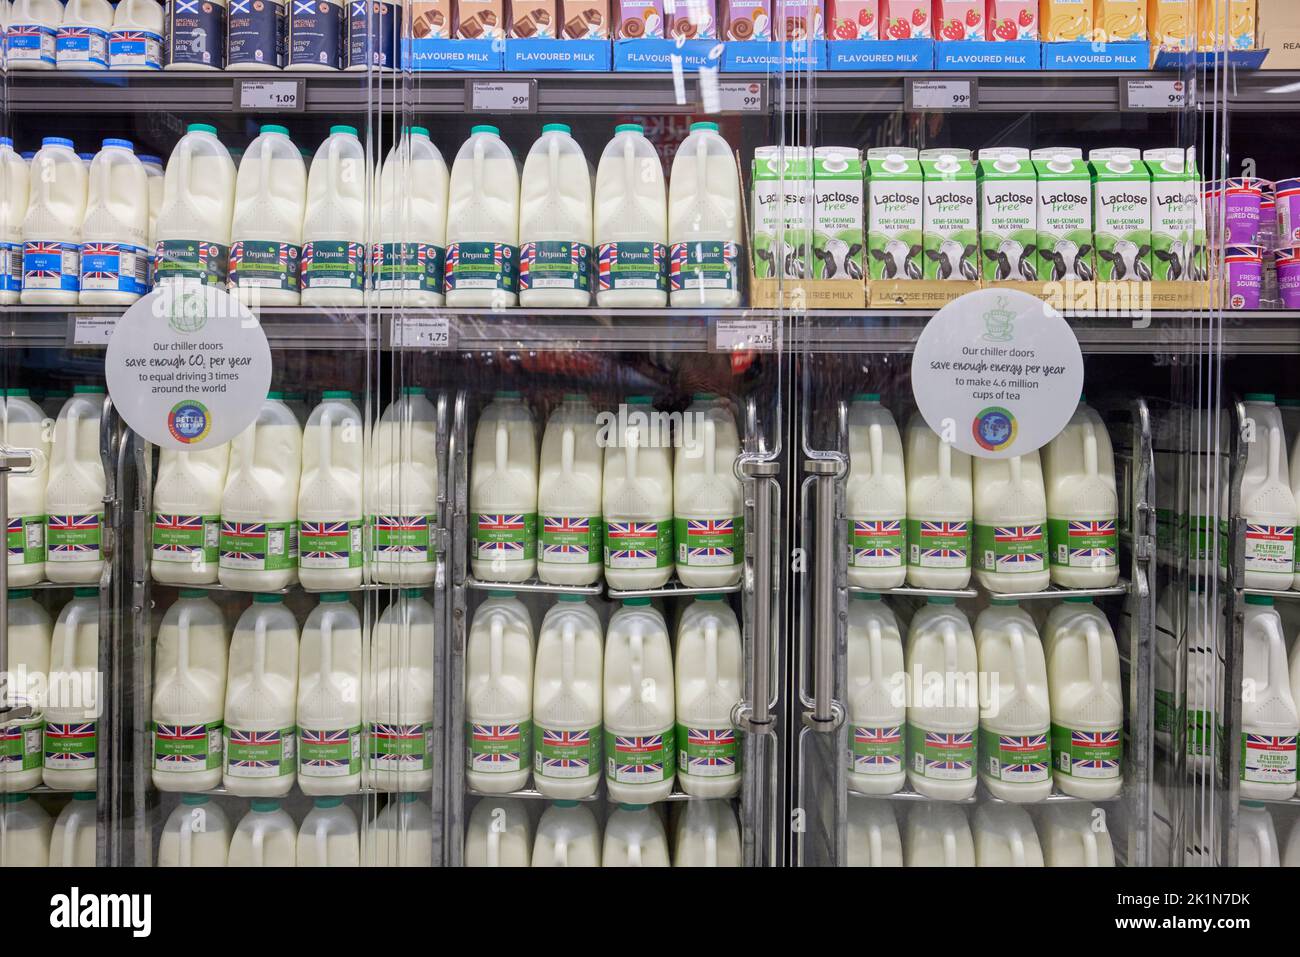 https://c8.alamy.com/comp/2K1N7DK/supermarket-milk-in-plastic-cartons-at-aldi-2K1N7DK.jpg